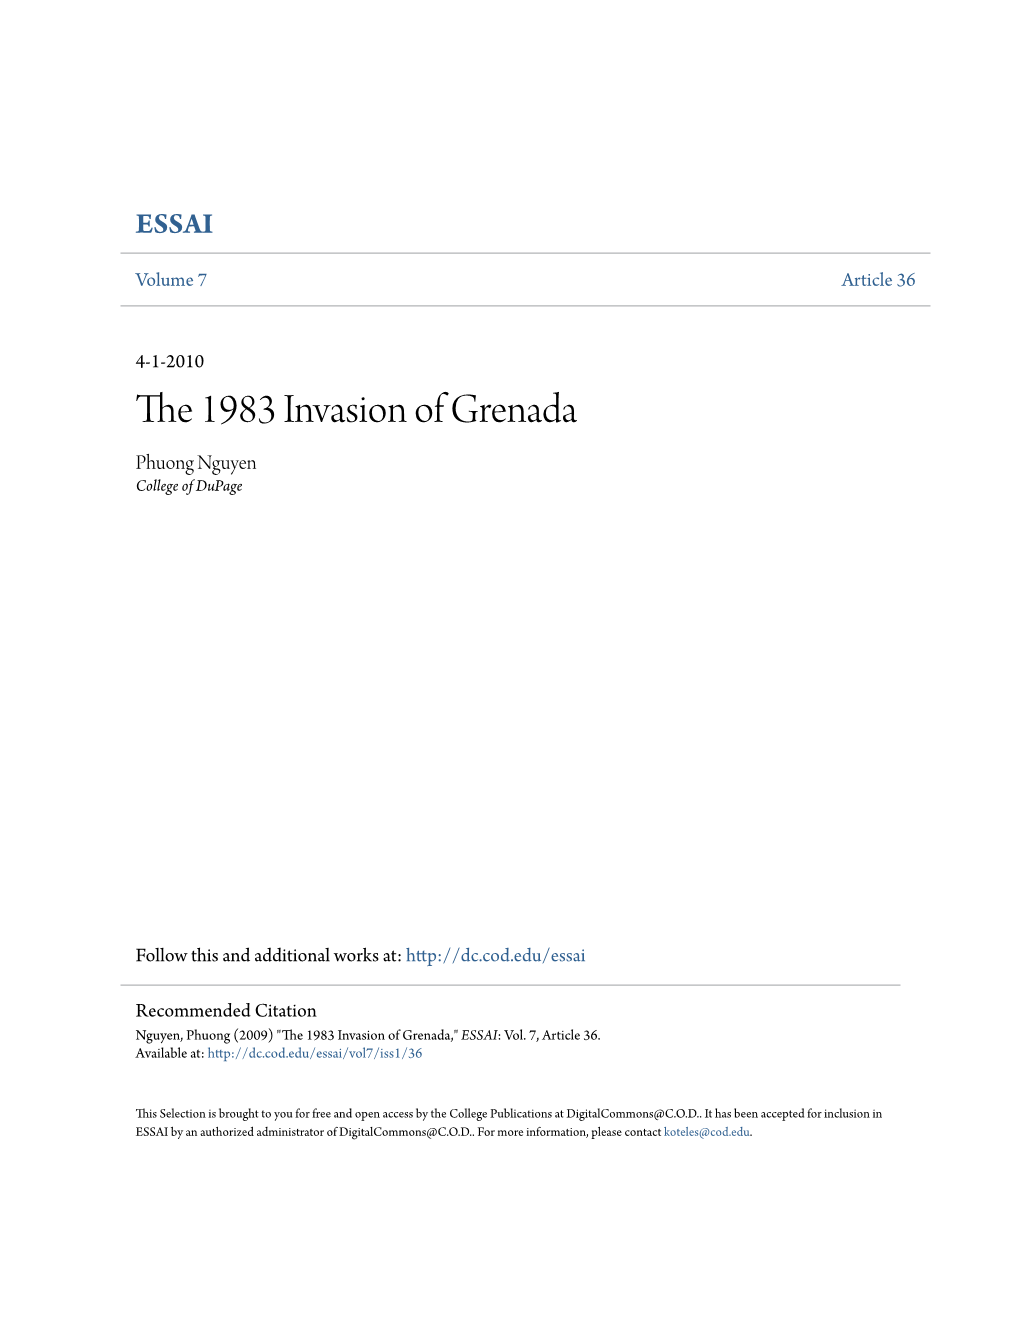 The 1983 Invasion of Grenada